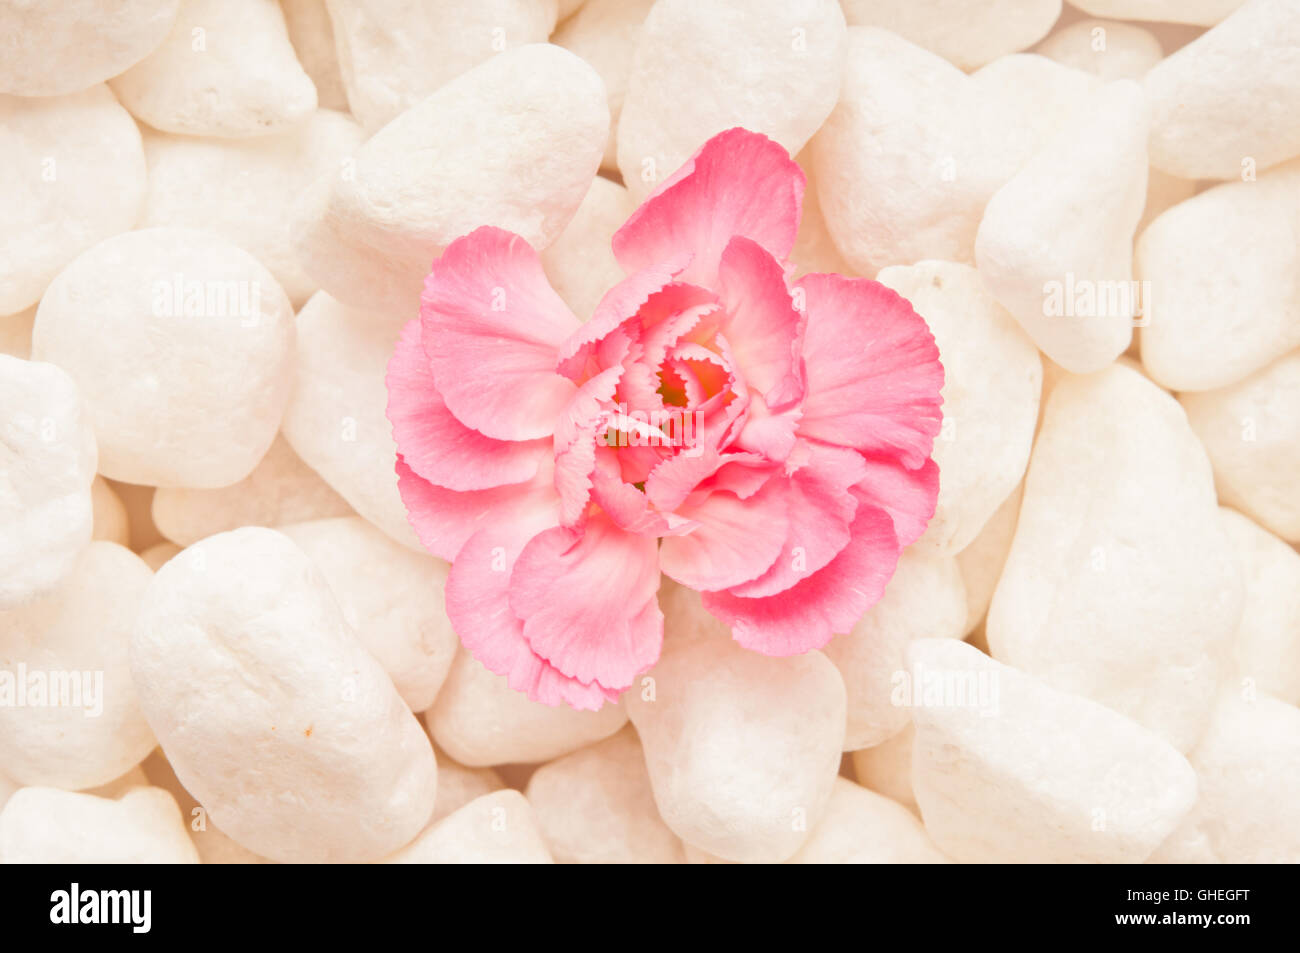 pink carnation flower, meditation and mindfulness concept Stock Photo